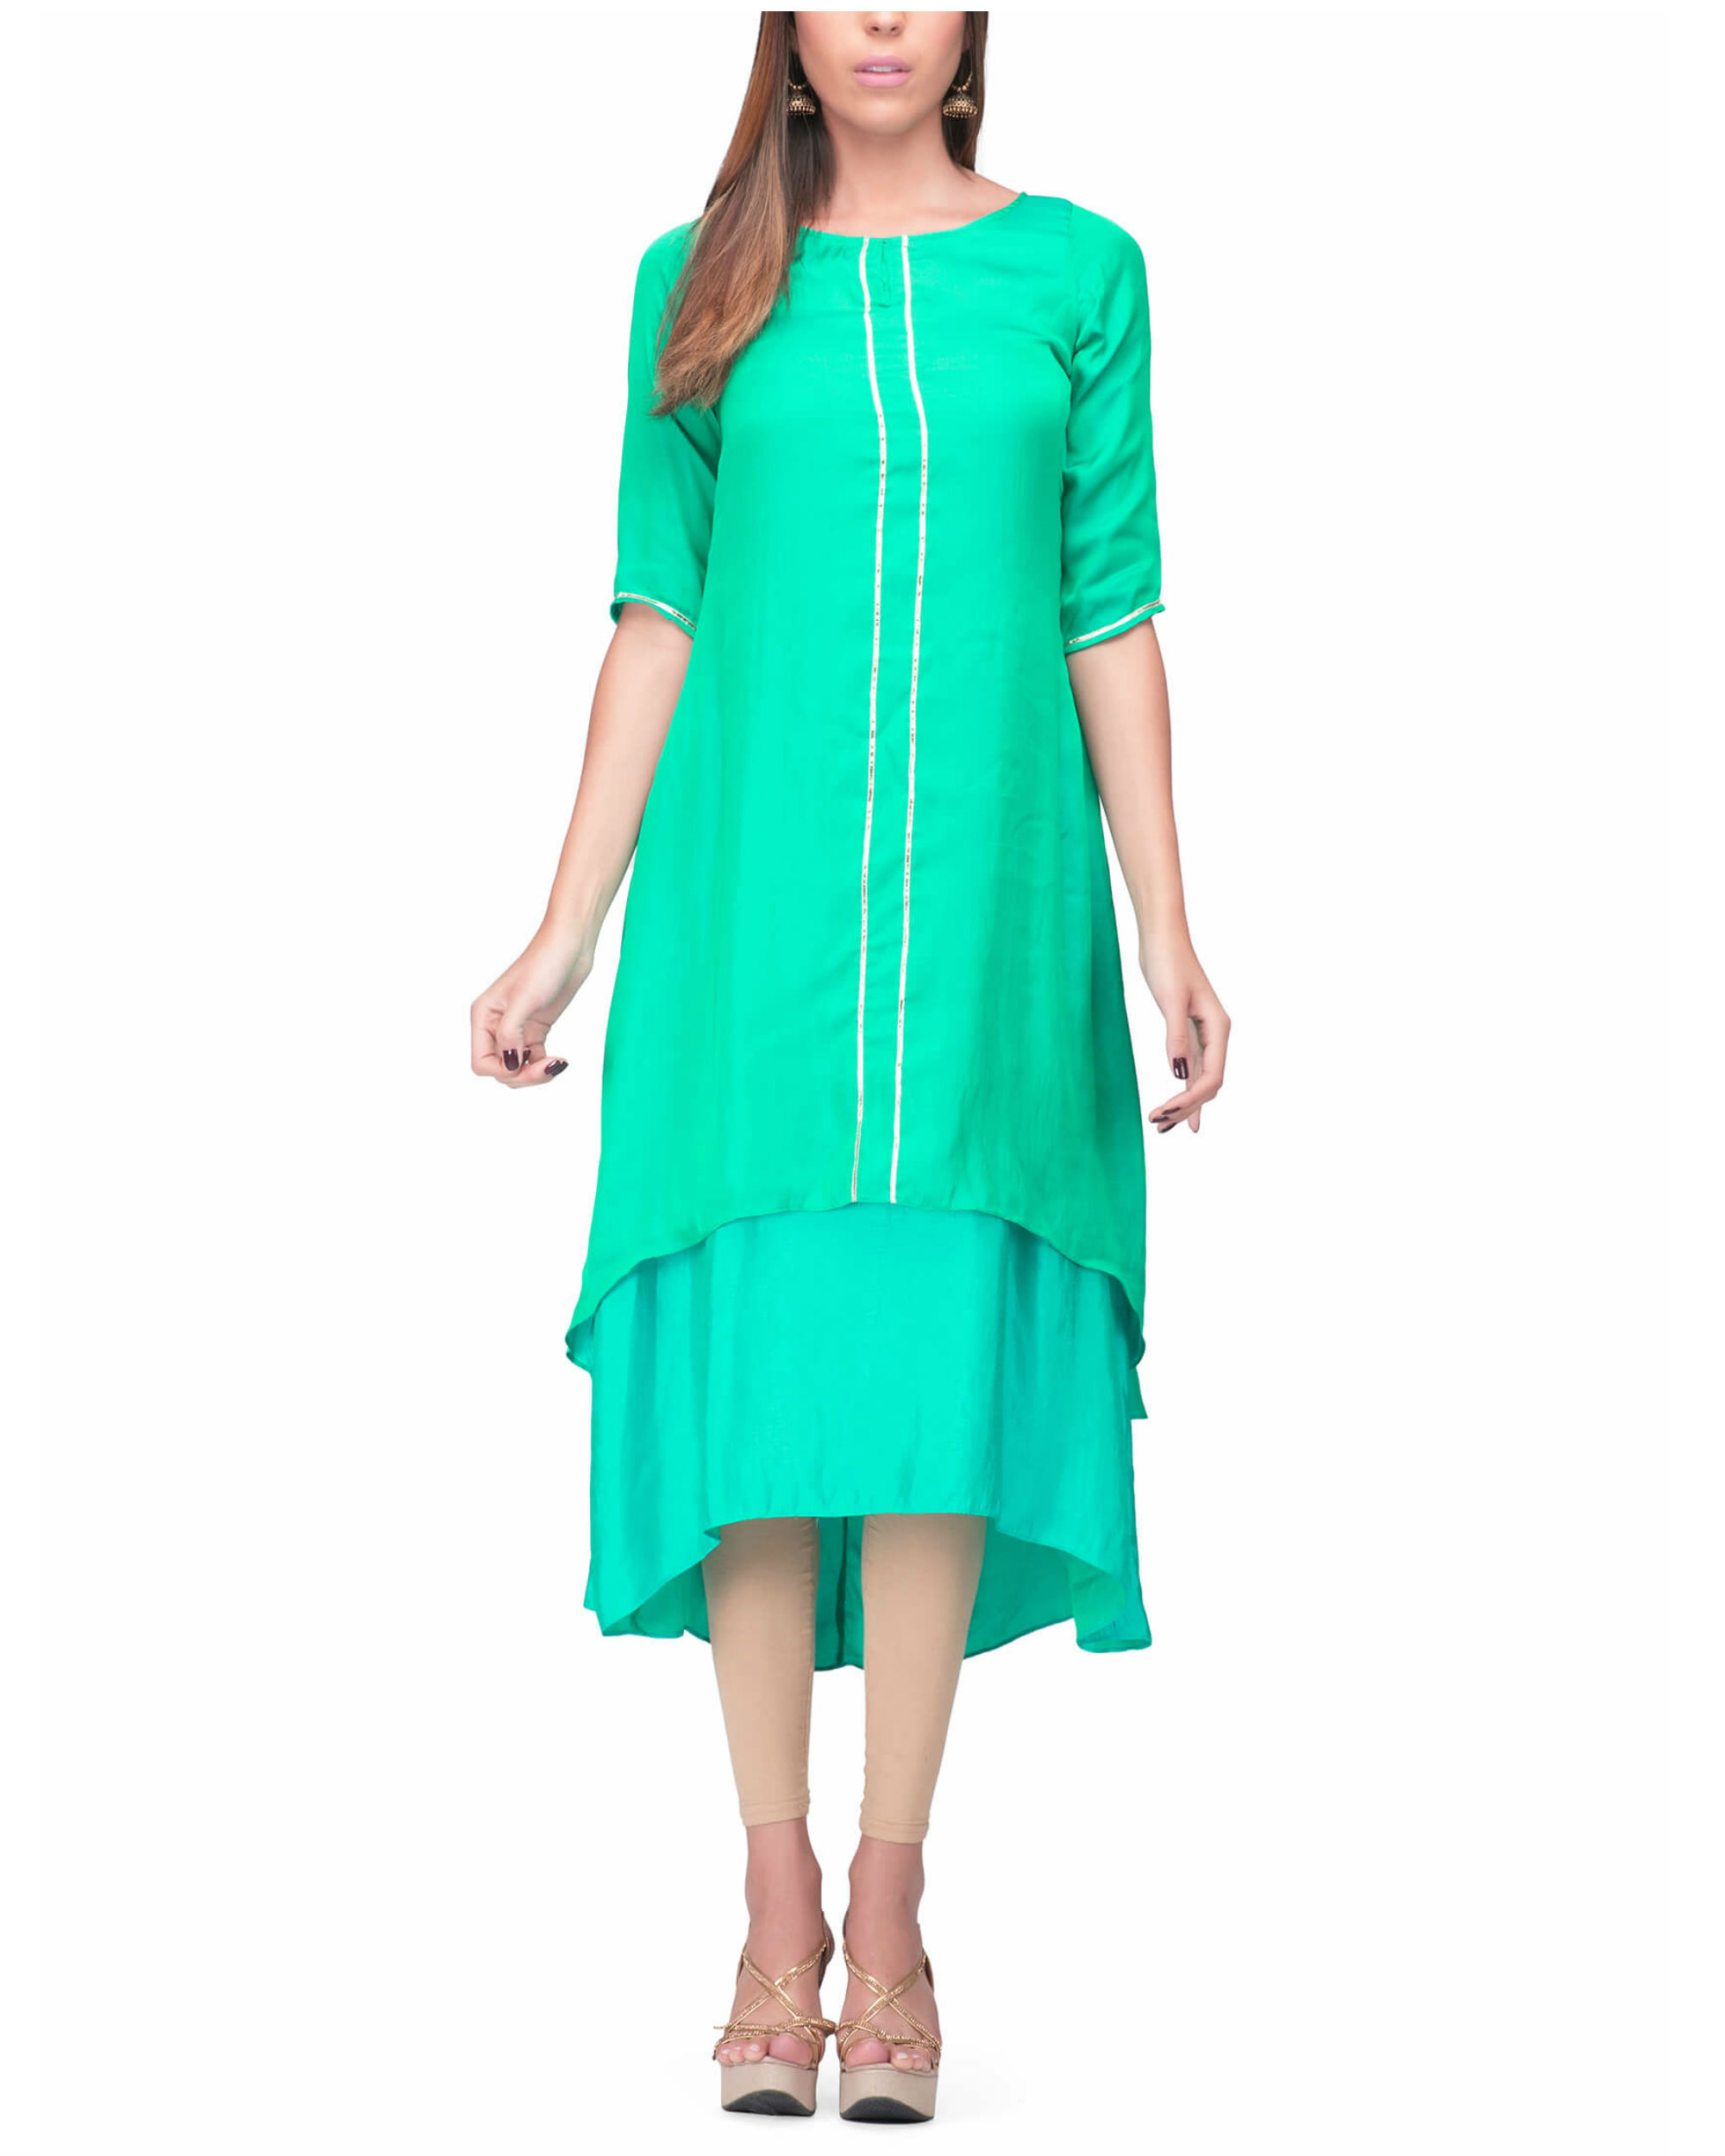 Green aqua layer dress by The Svaya | The Secret Label